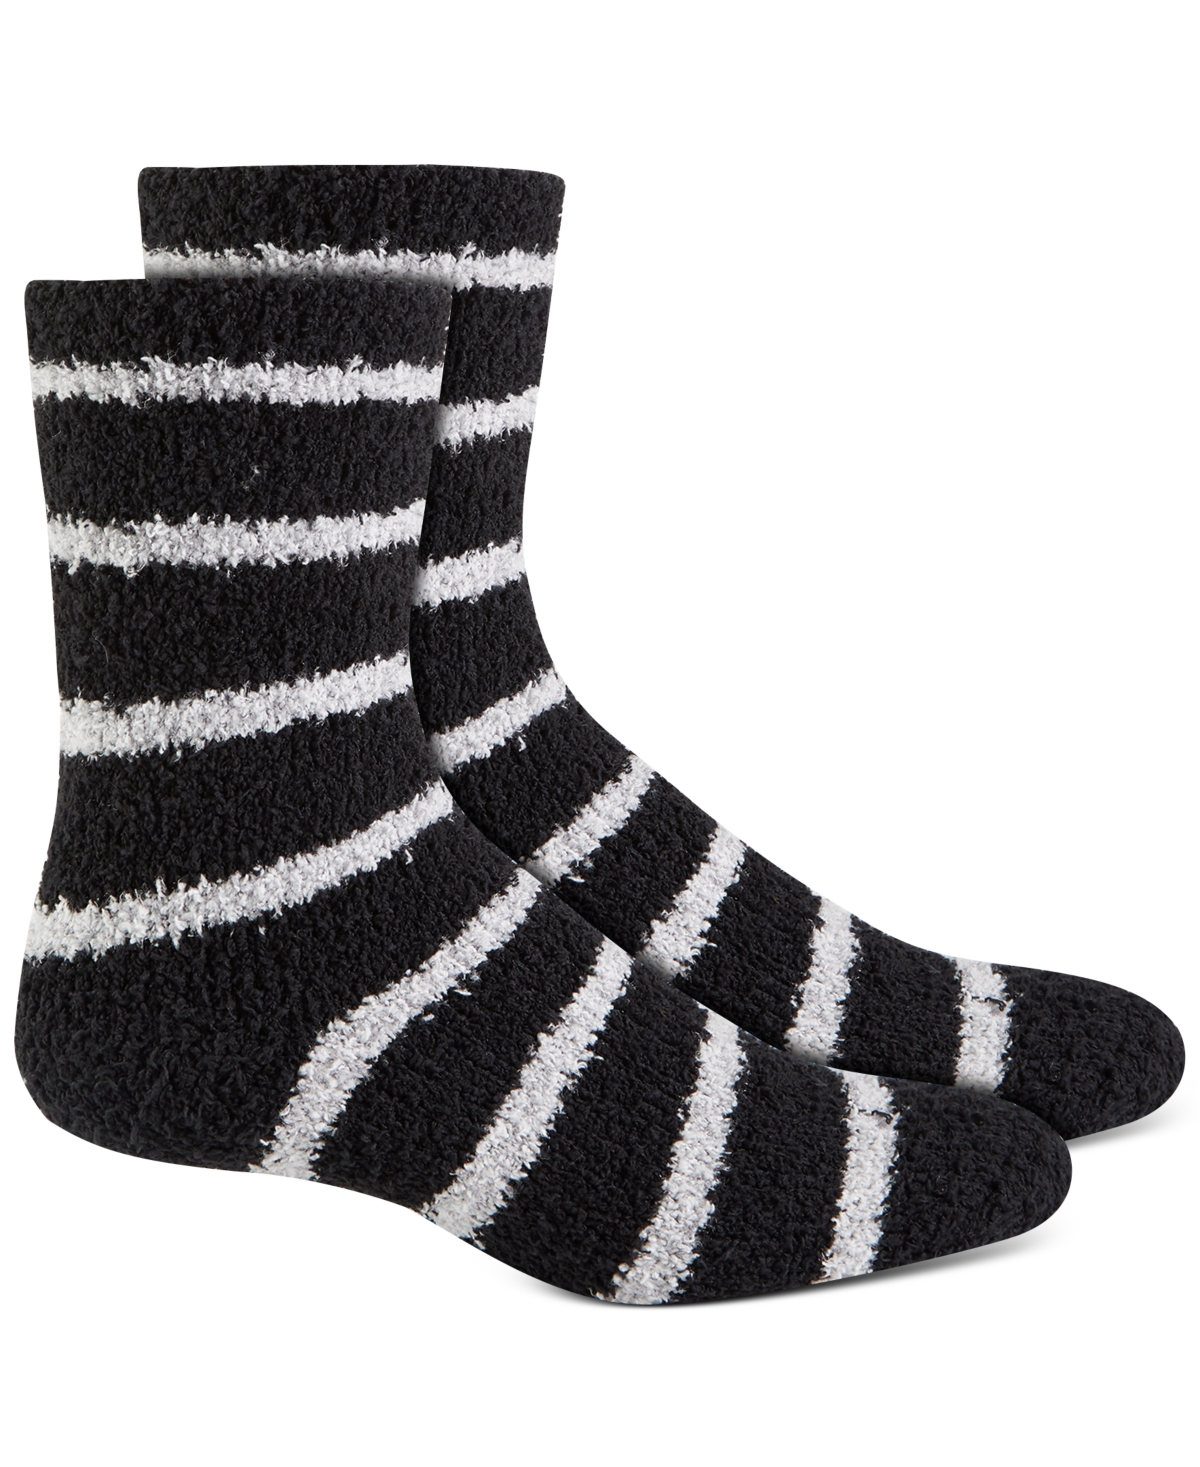 Charter Club Women's Marled Stripe Butter Socks (One Size, Black)